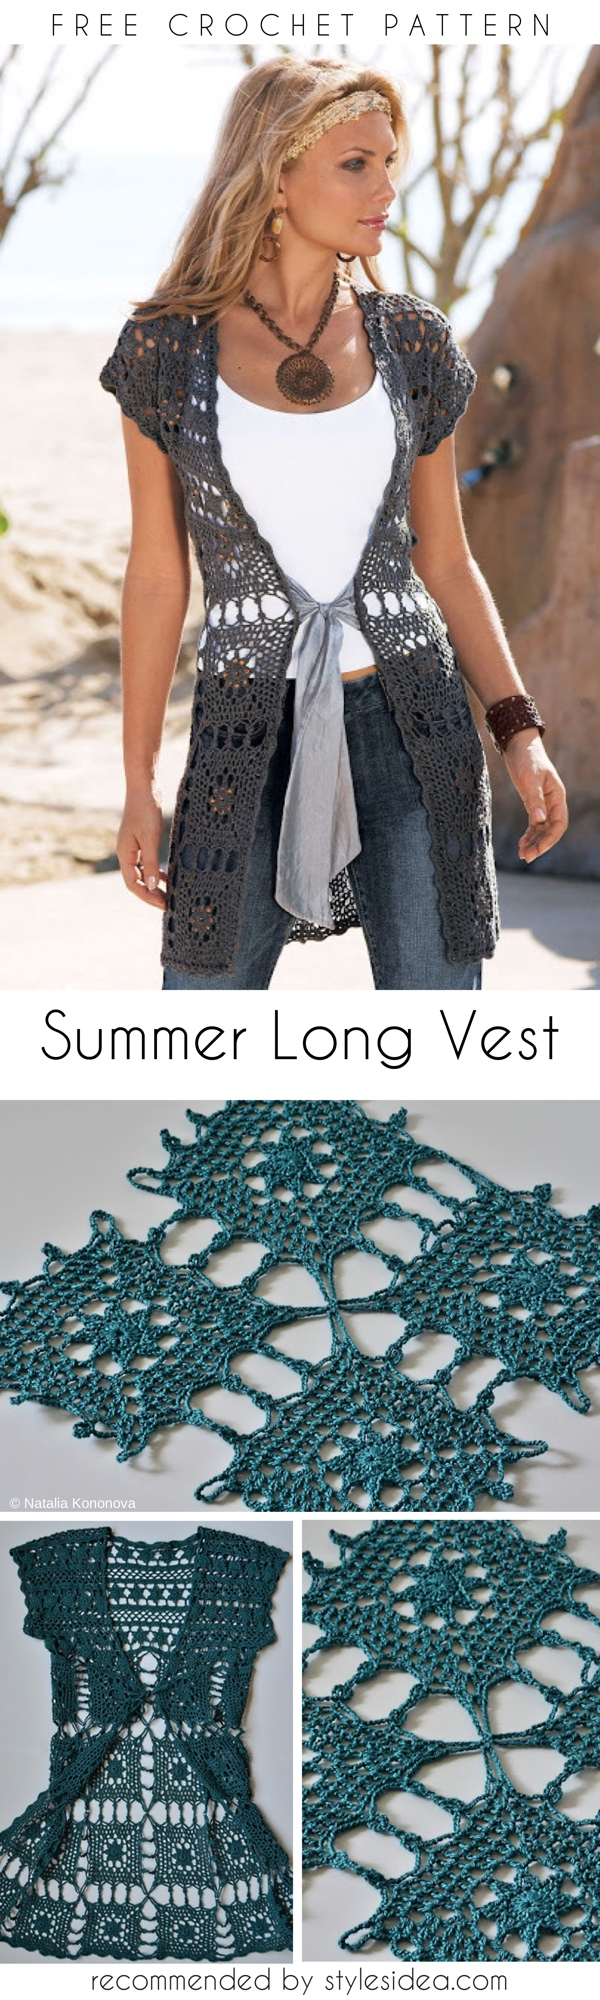 Free Crochet Tunic Patterns Pretty Long Vest Summer Crochet Tunic Free Pattern Styles Idea